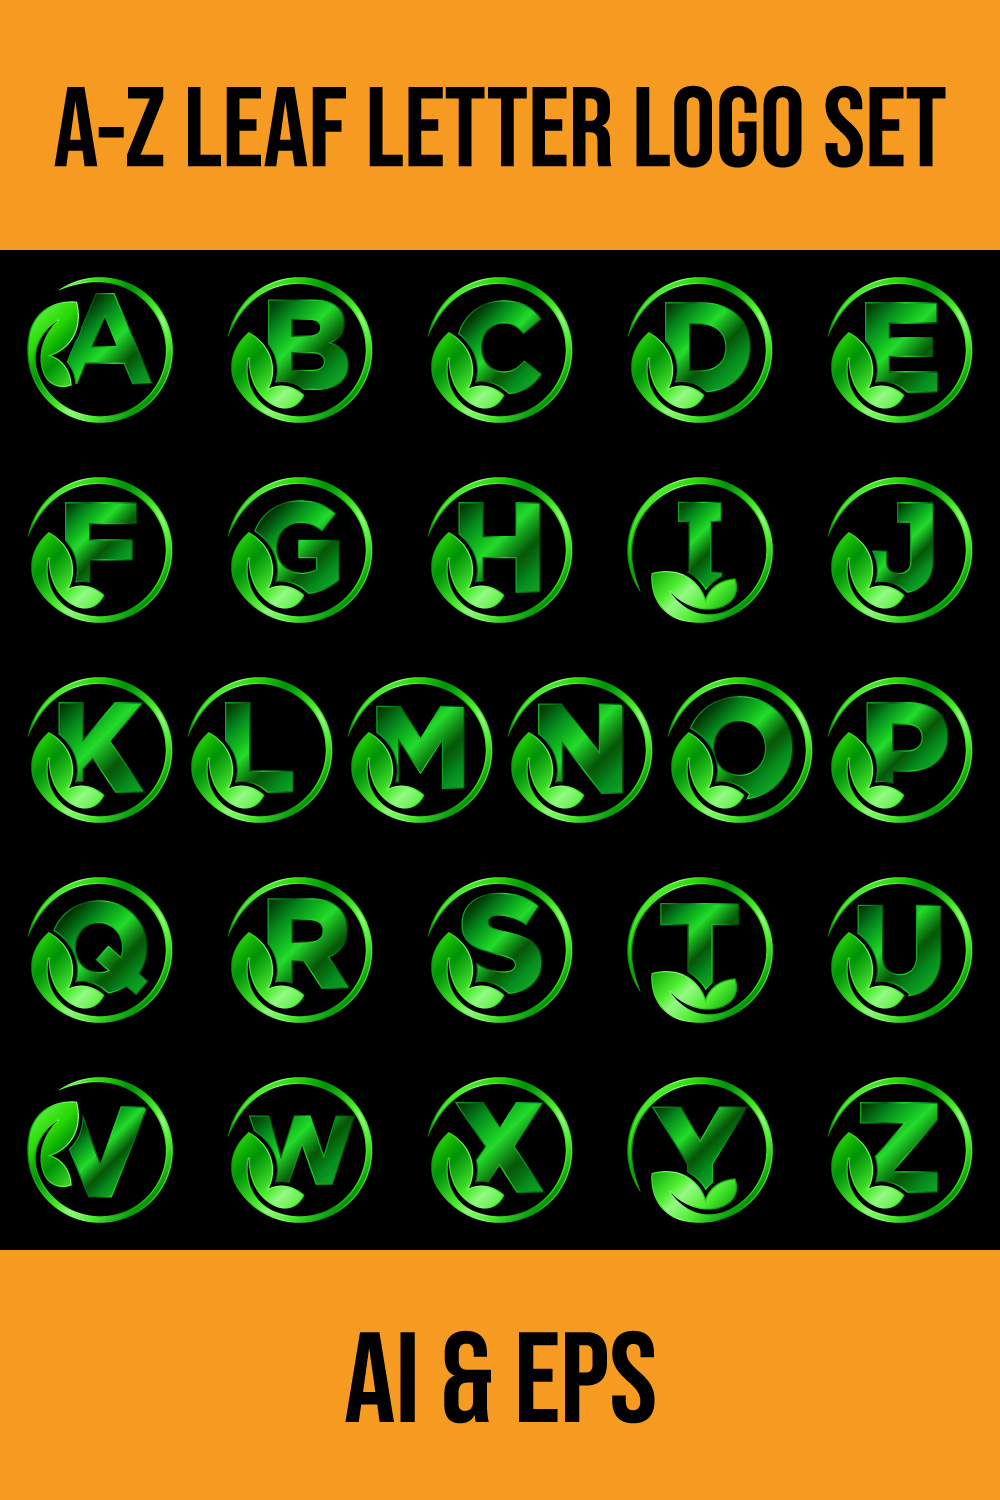 Initial A-Z monogram alphabet with leaf Eco-friendly logo concept Font emblem pinterest preview image.